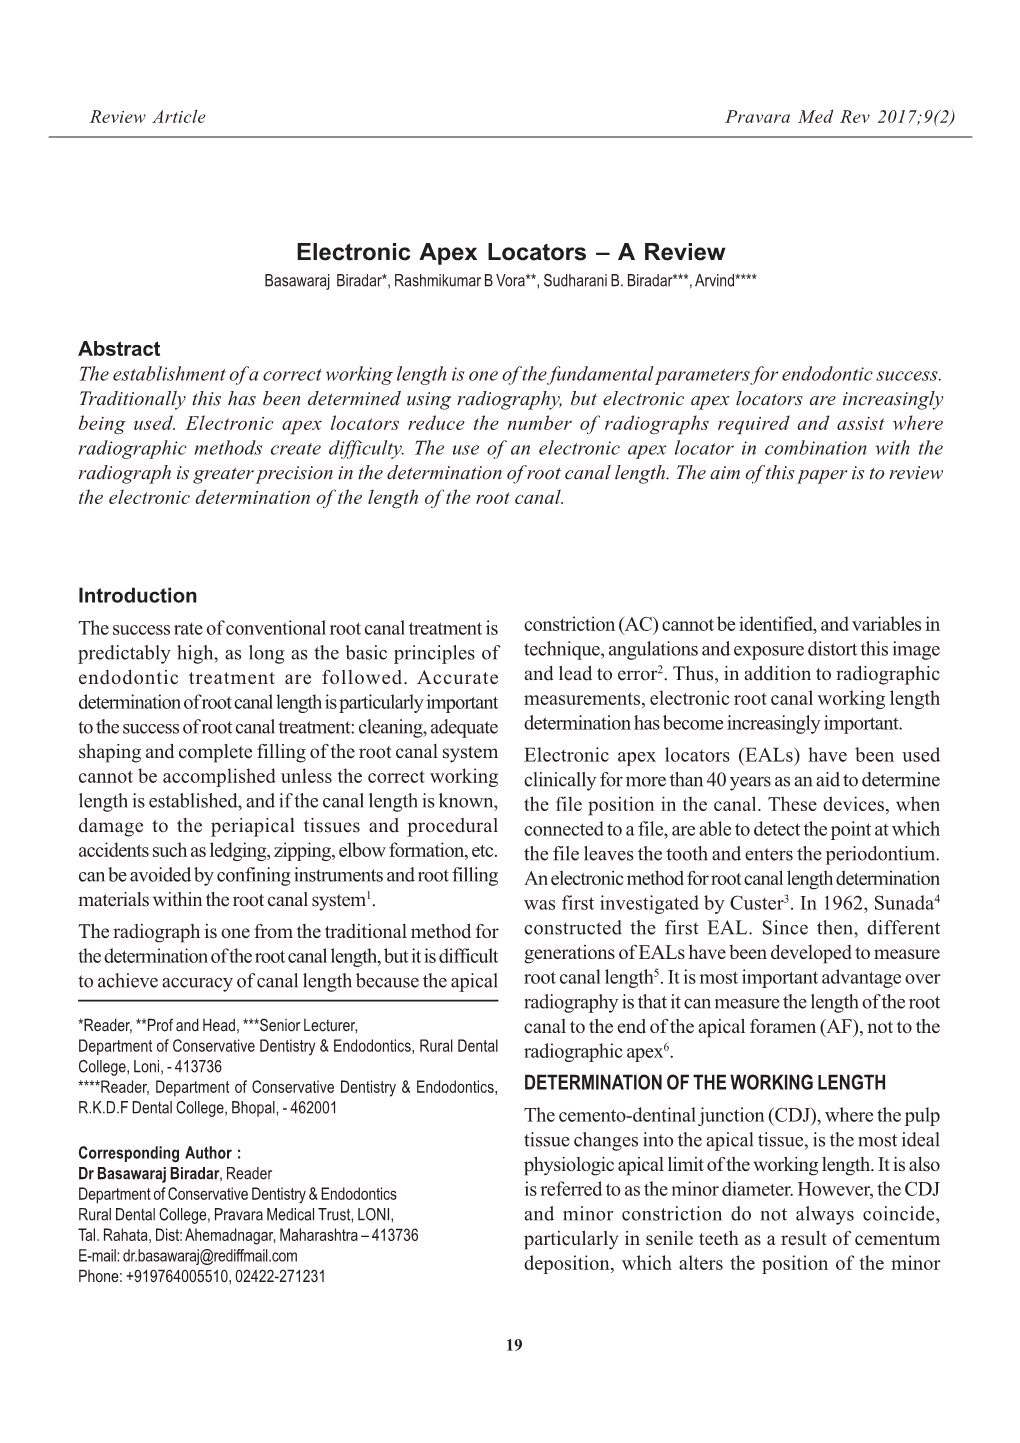 Electronic Apex Locators – a Review -Basawaraj Biradar, Rashmikumar B